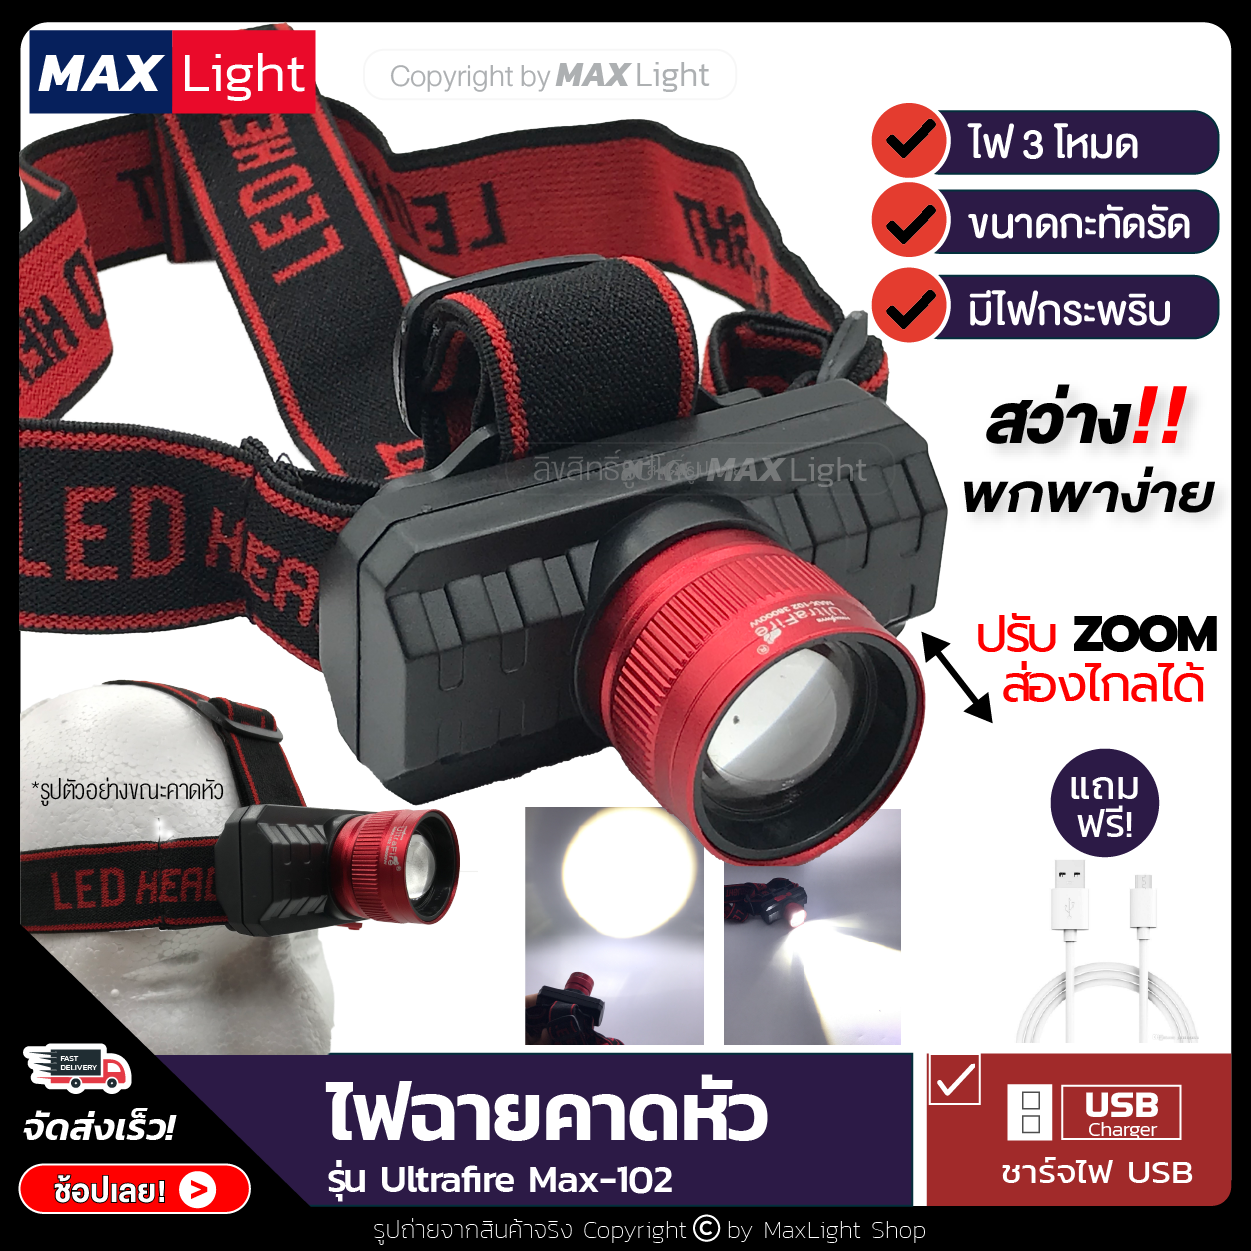 MaxLight ไฟฉายคาดหัว เล็กกะทัดรัด ไฟสว่าง 3 ระดับ Zoomได้ส่องไกล ไฟกระพริบได้ ชาร์จไฟ USB รุ่น Ultrafire-102 ใช้เดินป่า ฉุกเฉิน กรีดยาง พกพาง่าย